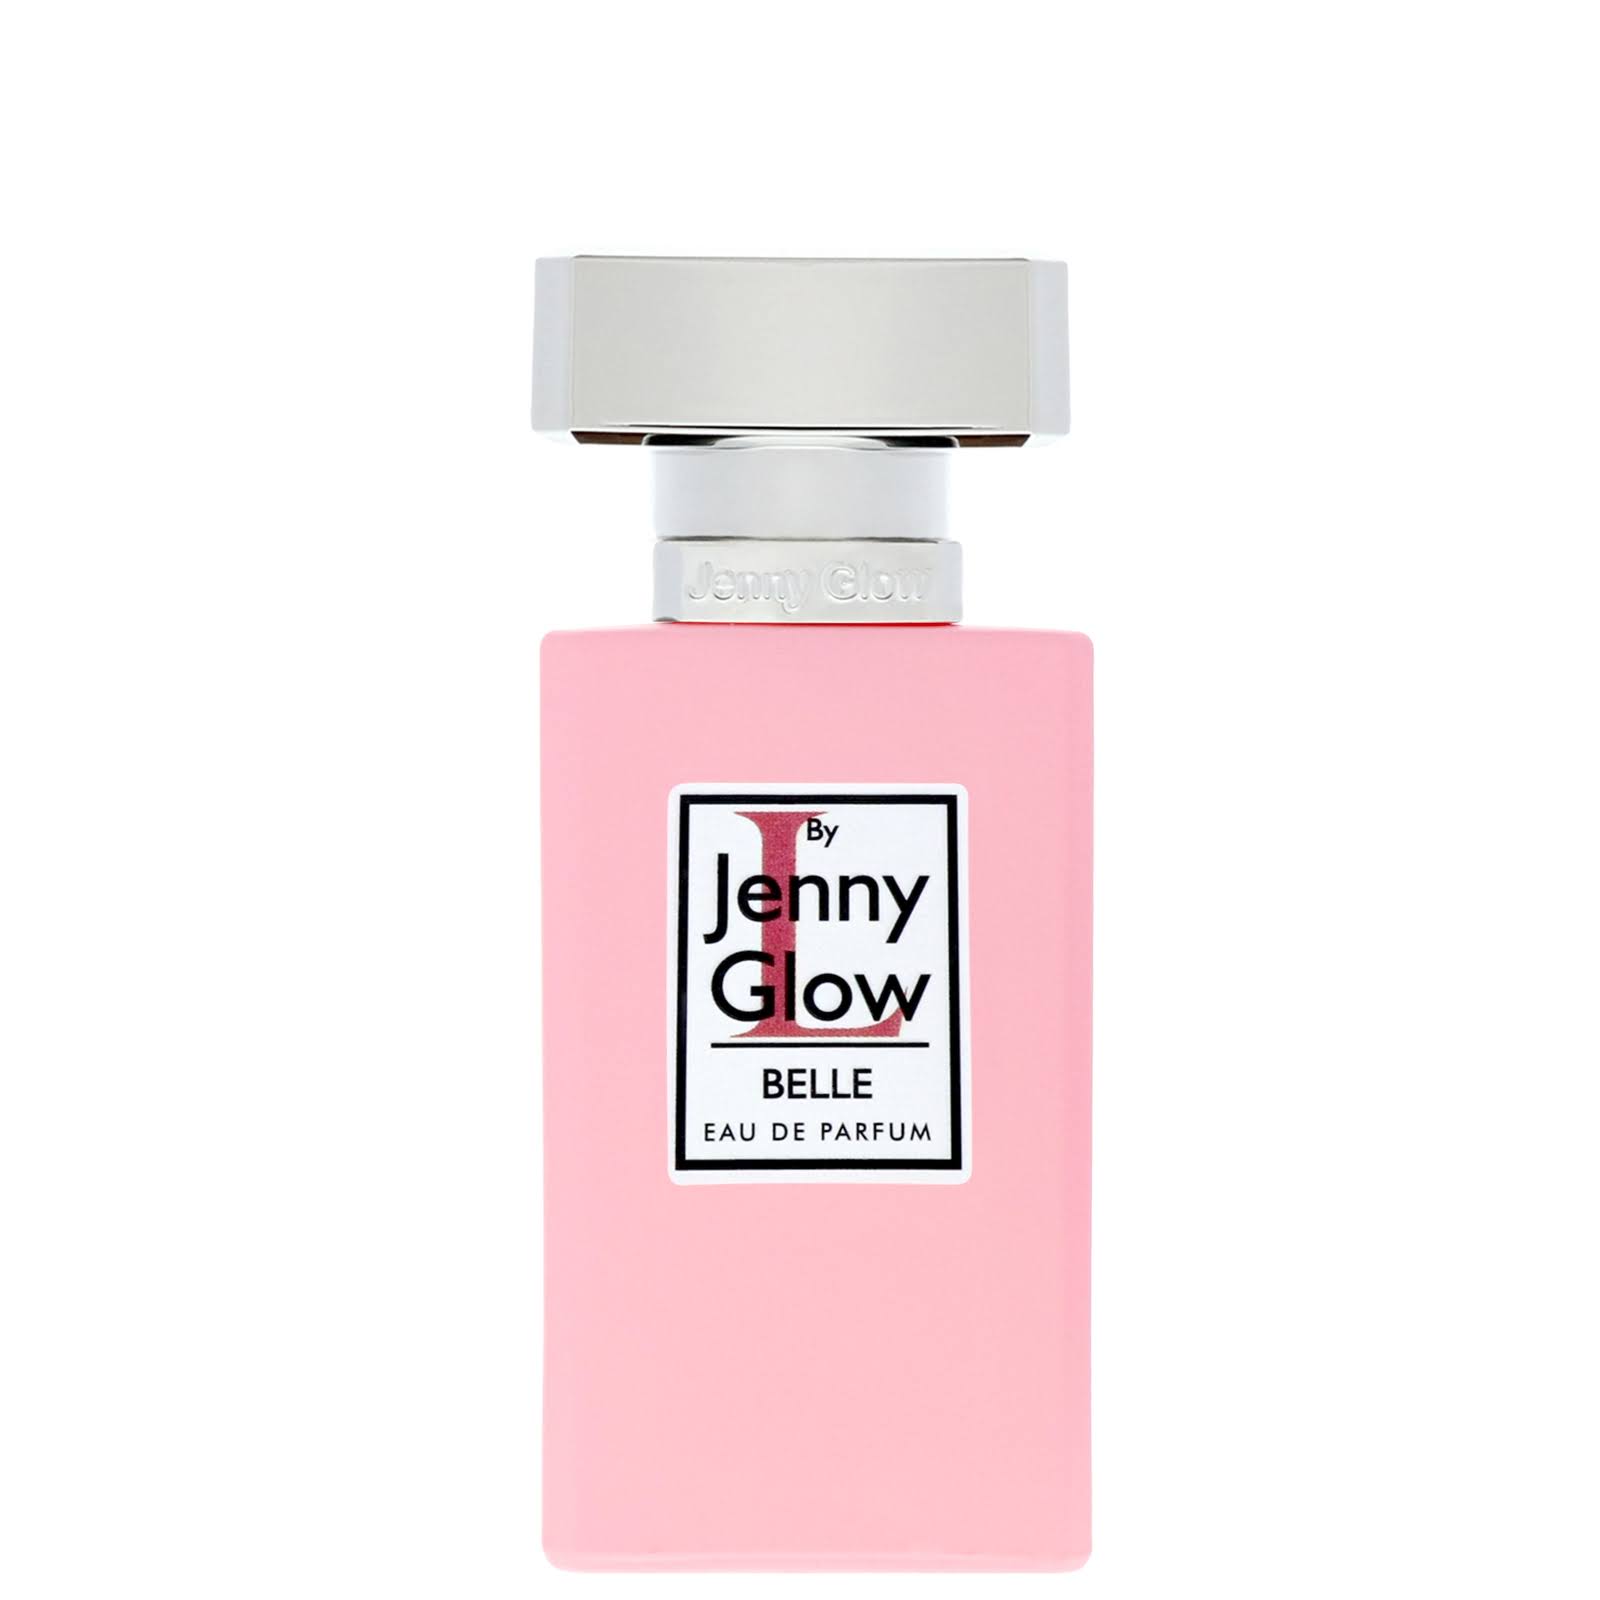 Jenny Glow L by Jenny Glow EDP Belle - 30ml